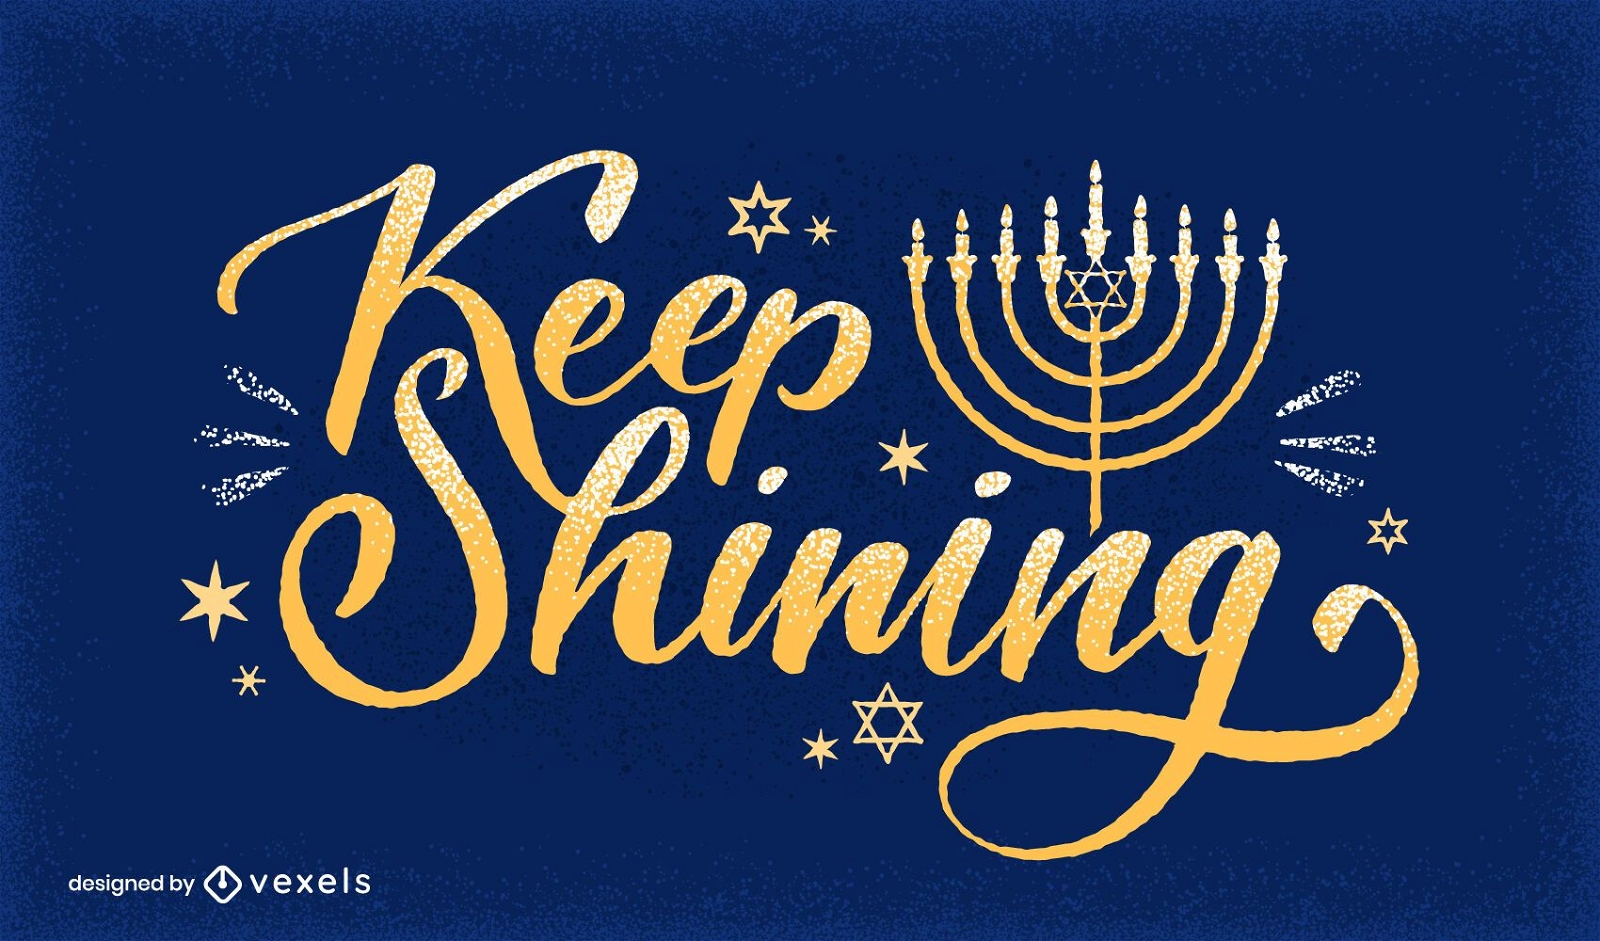 Keep shining hanukkah lettering design